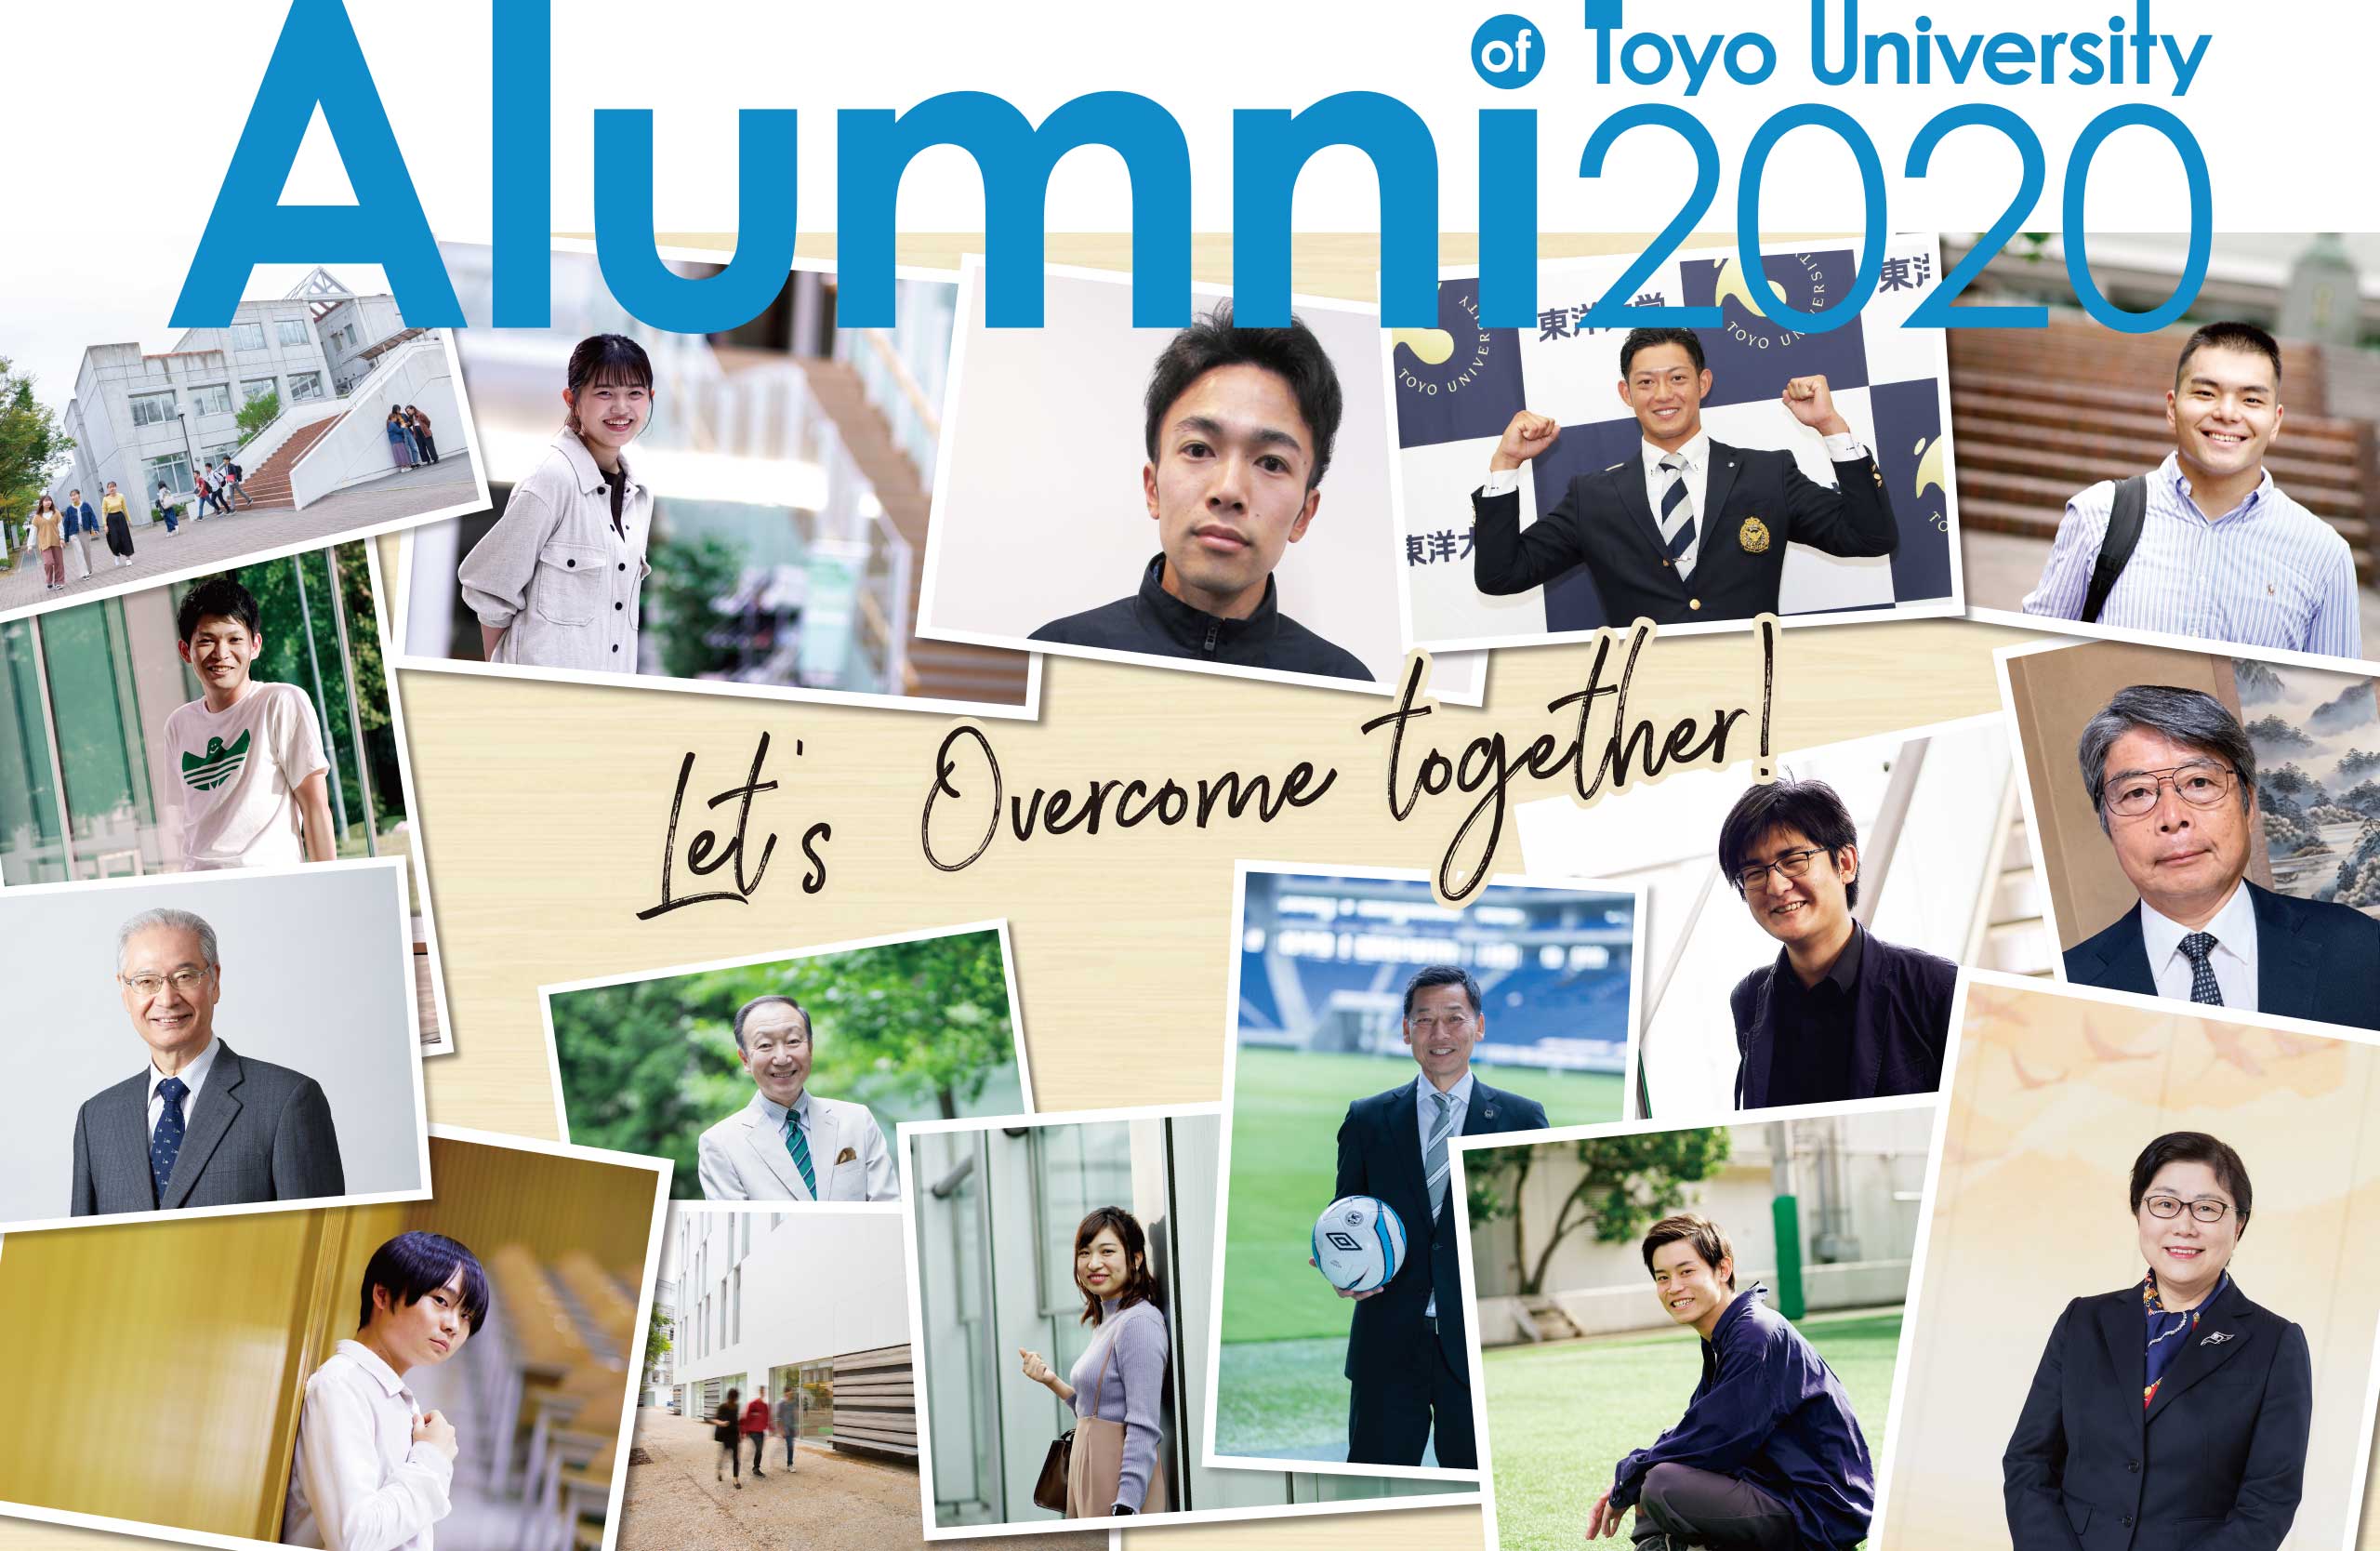 Alumni 2019 of Toyo University アルマナイ2019 東洋大学